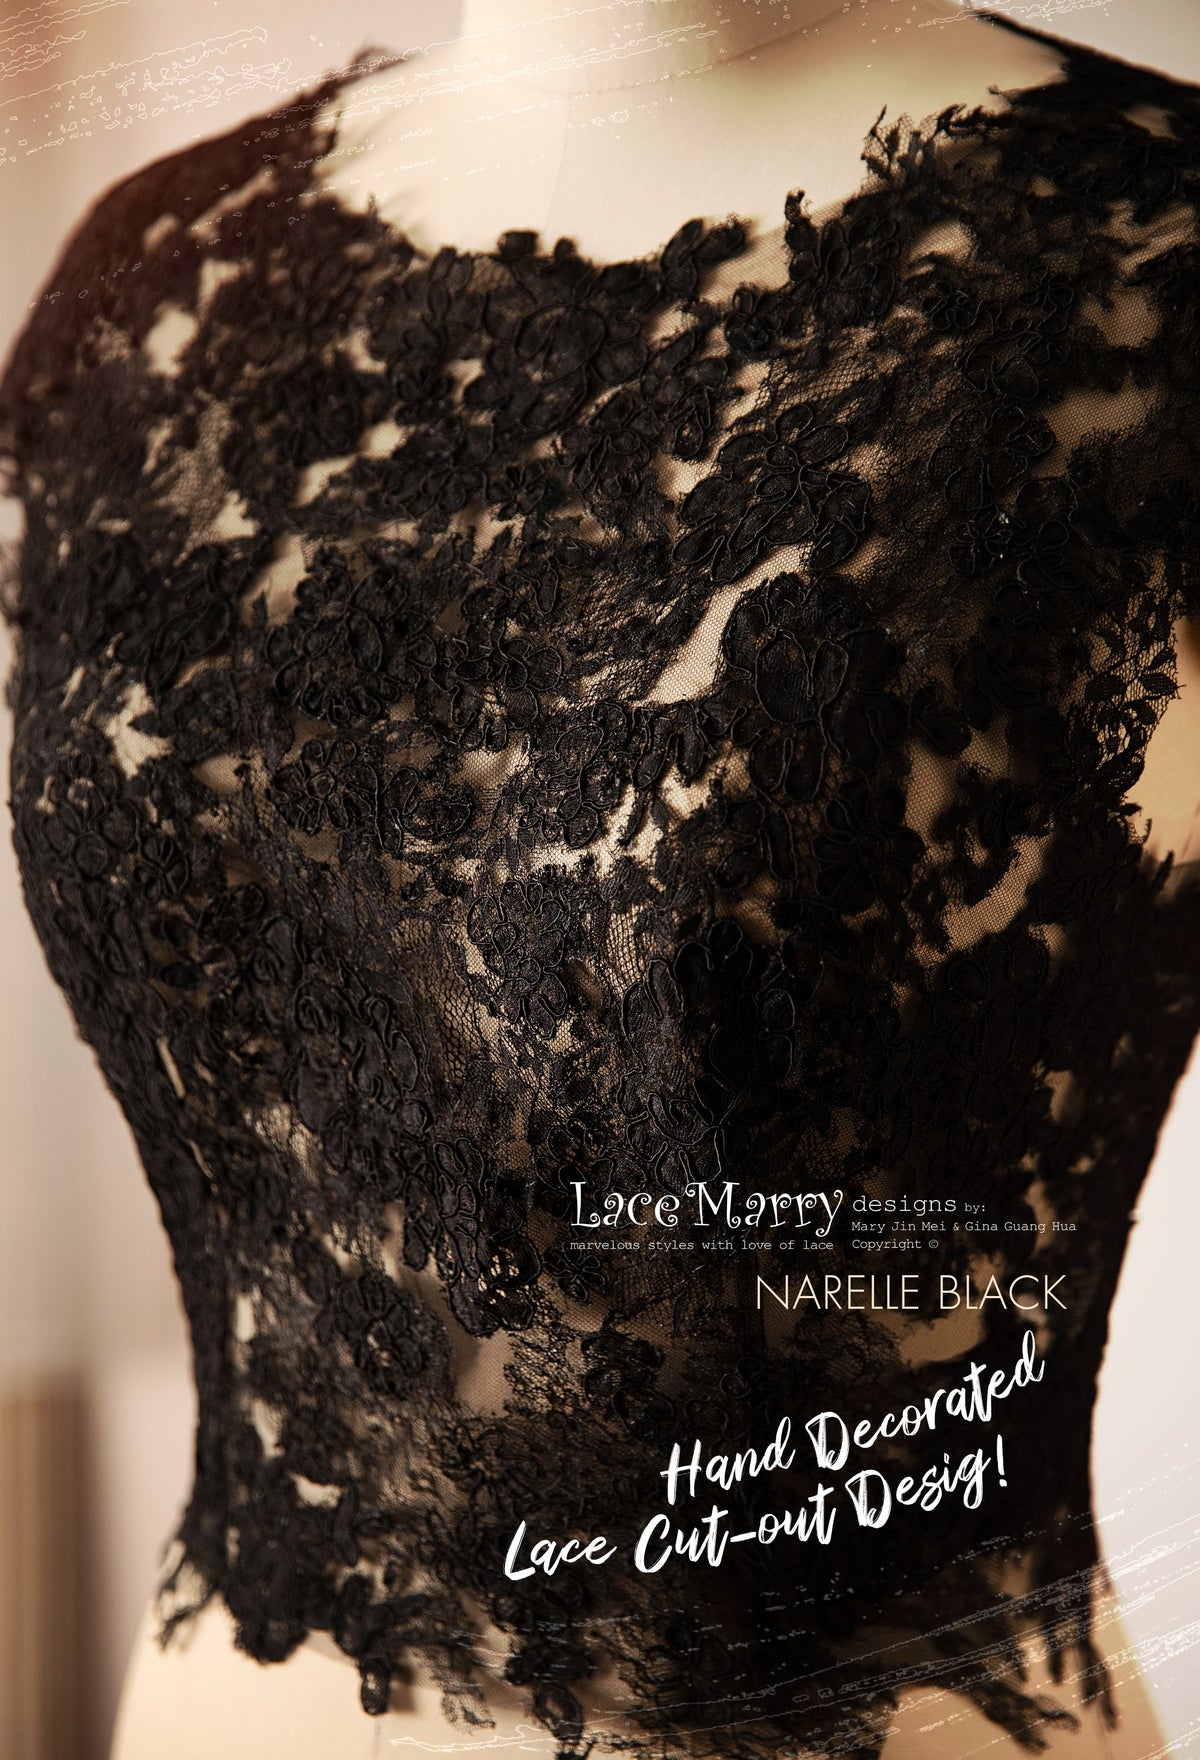 NARELLE / 3 Pieces Black Wedding Dress with Lace Bolero